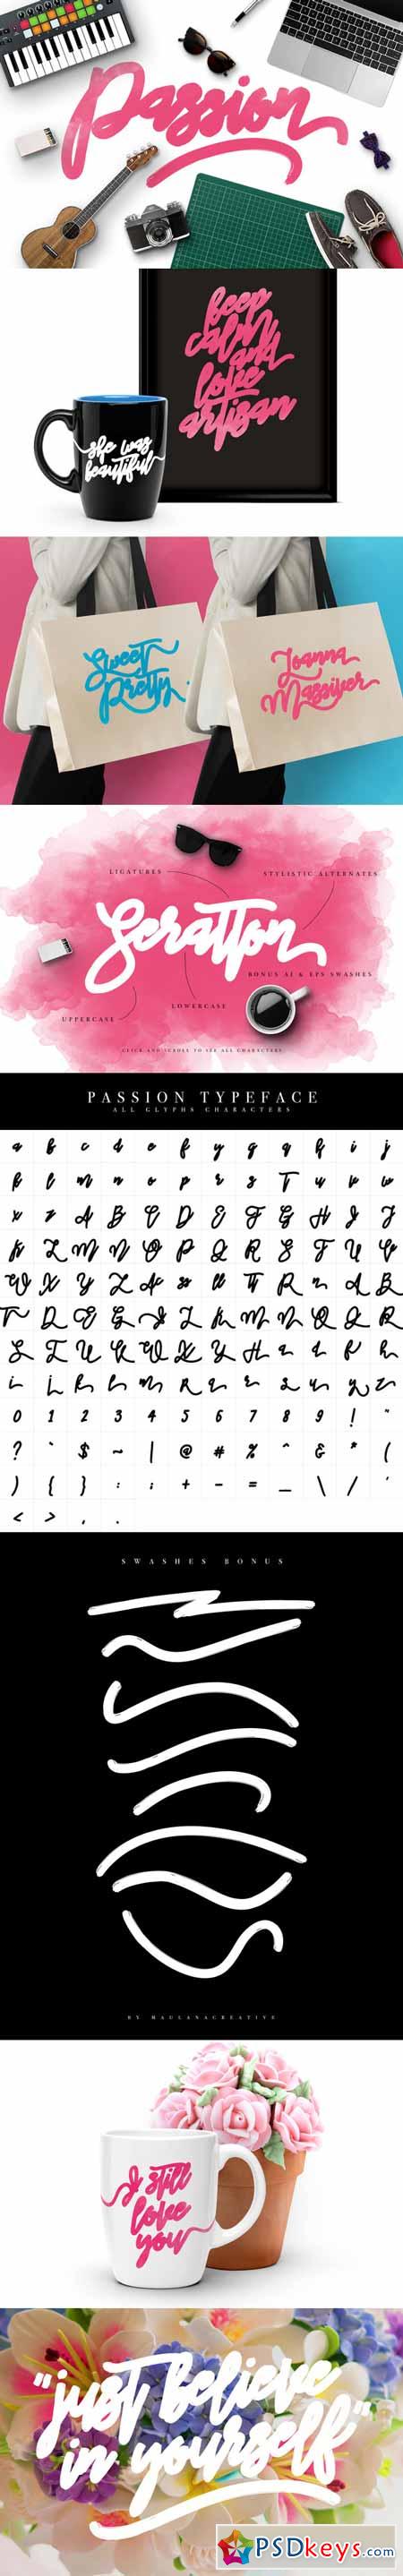 Passion Typeface 473134